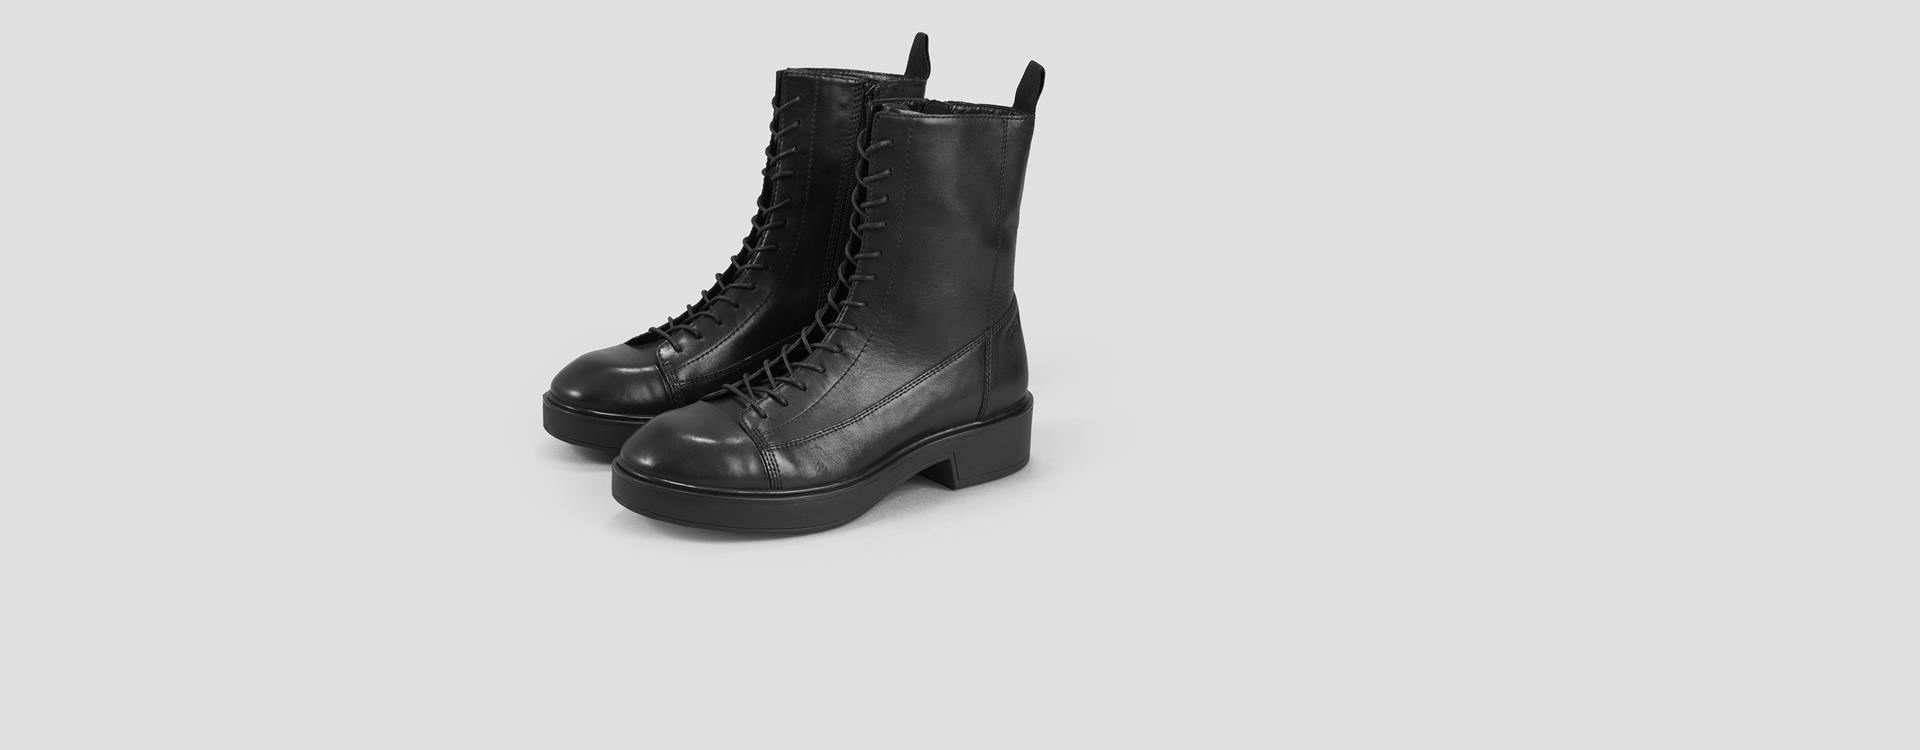 vagabond diane high boots black leather